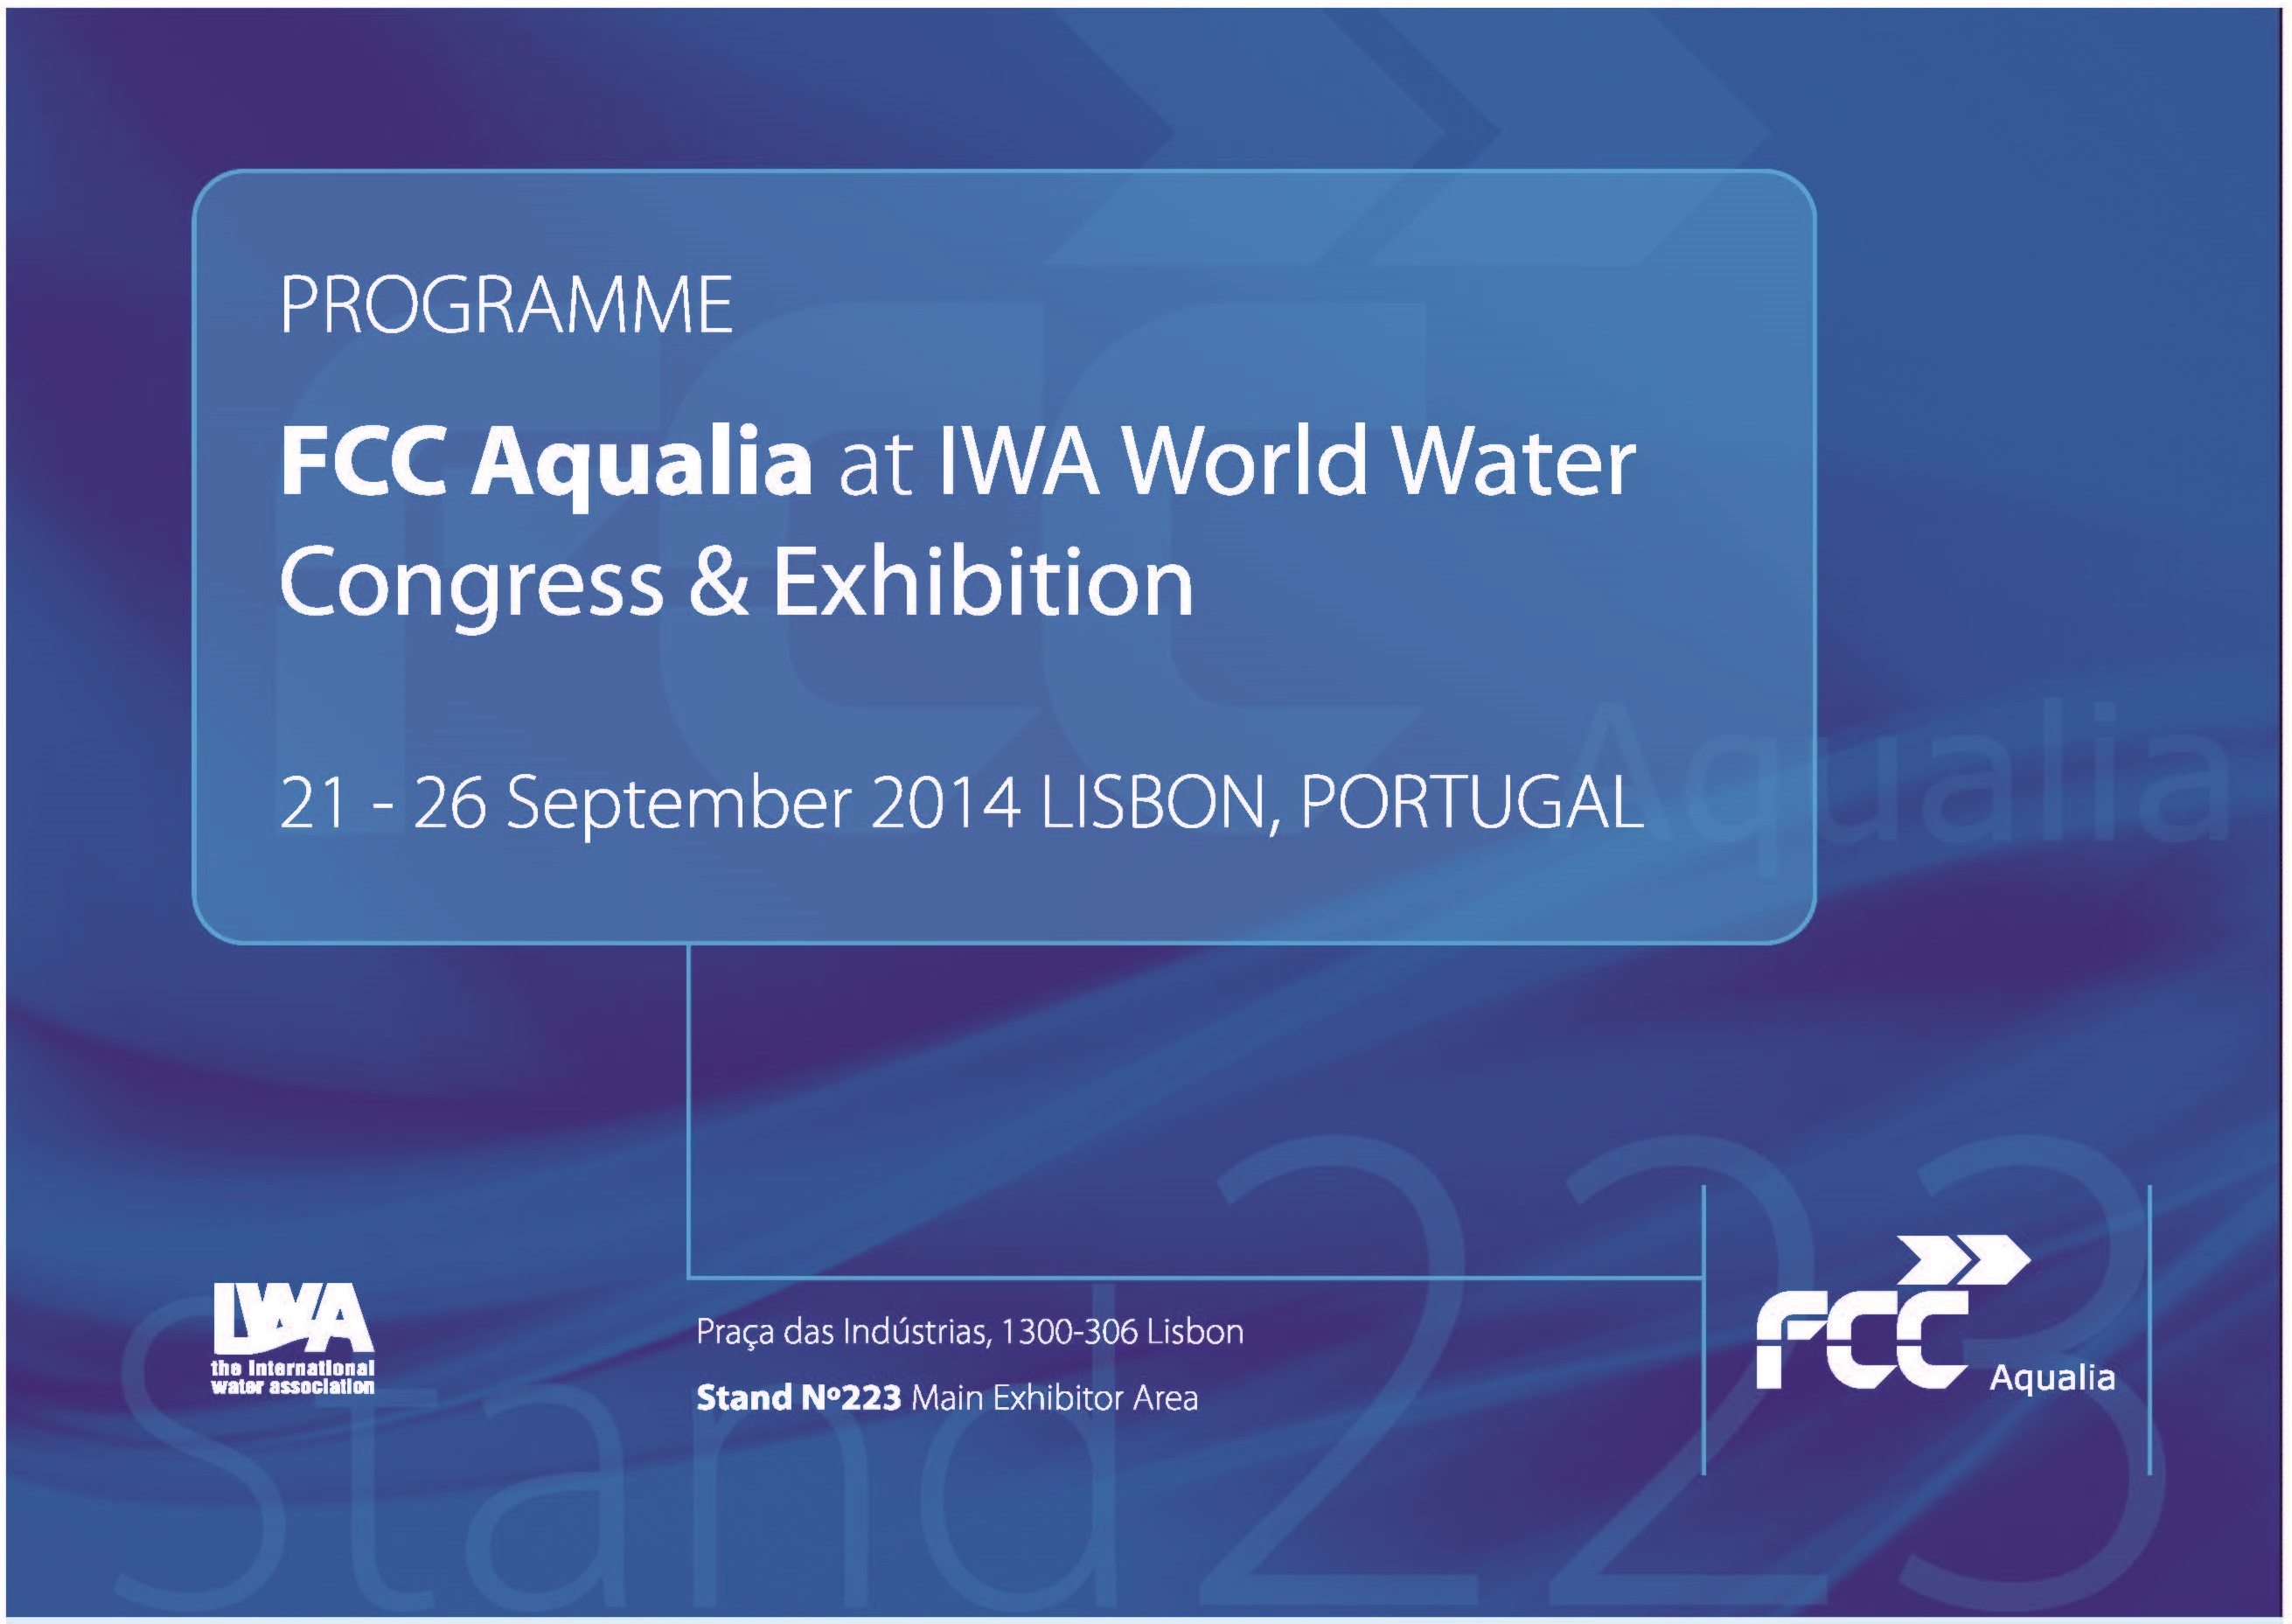 Technical developments at FCC Aqualia play leading role at IWA Congress 2014